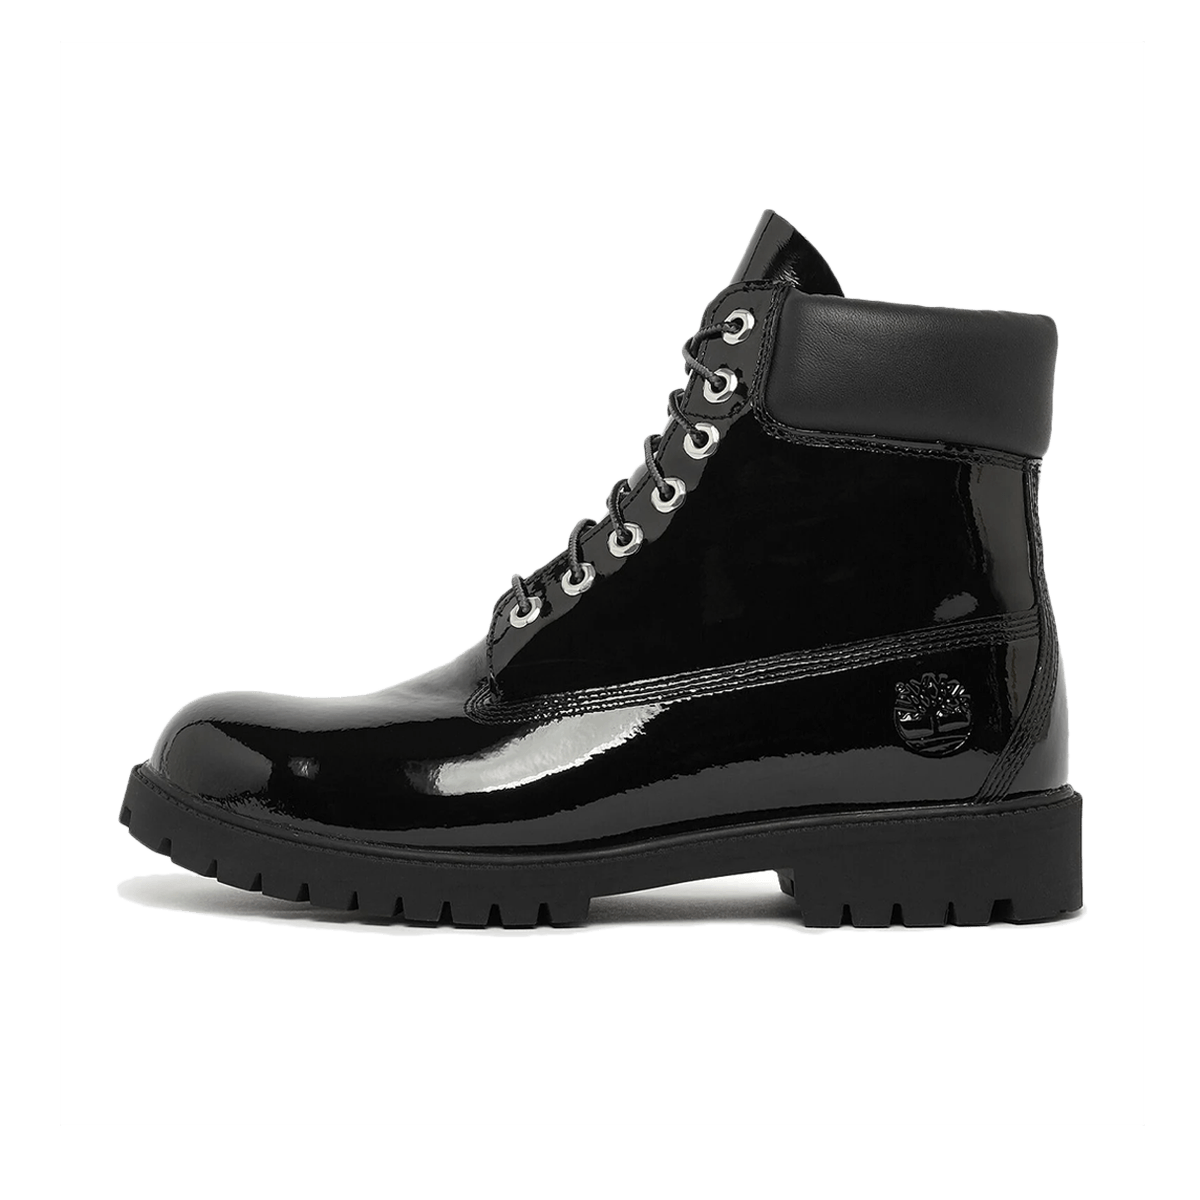 Veneda Carter x Timberland 6 Inch Boot 'Black' TB0A6D8ZEL61